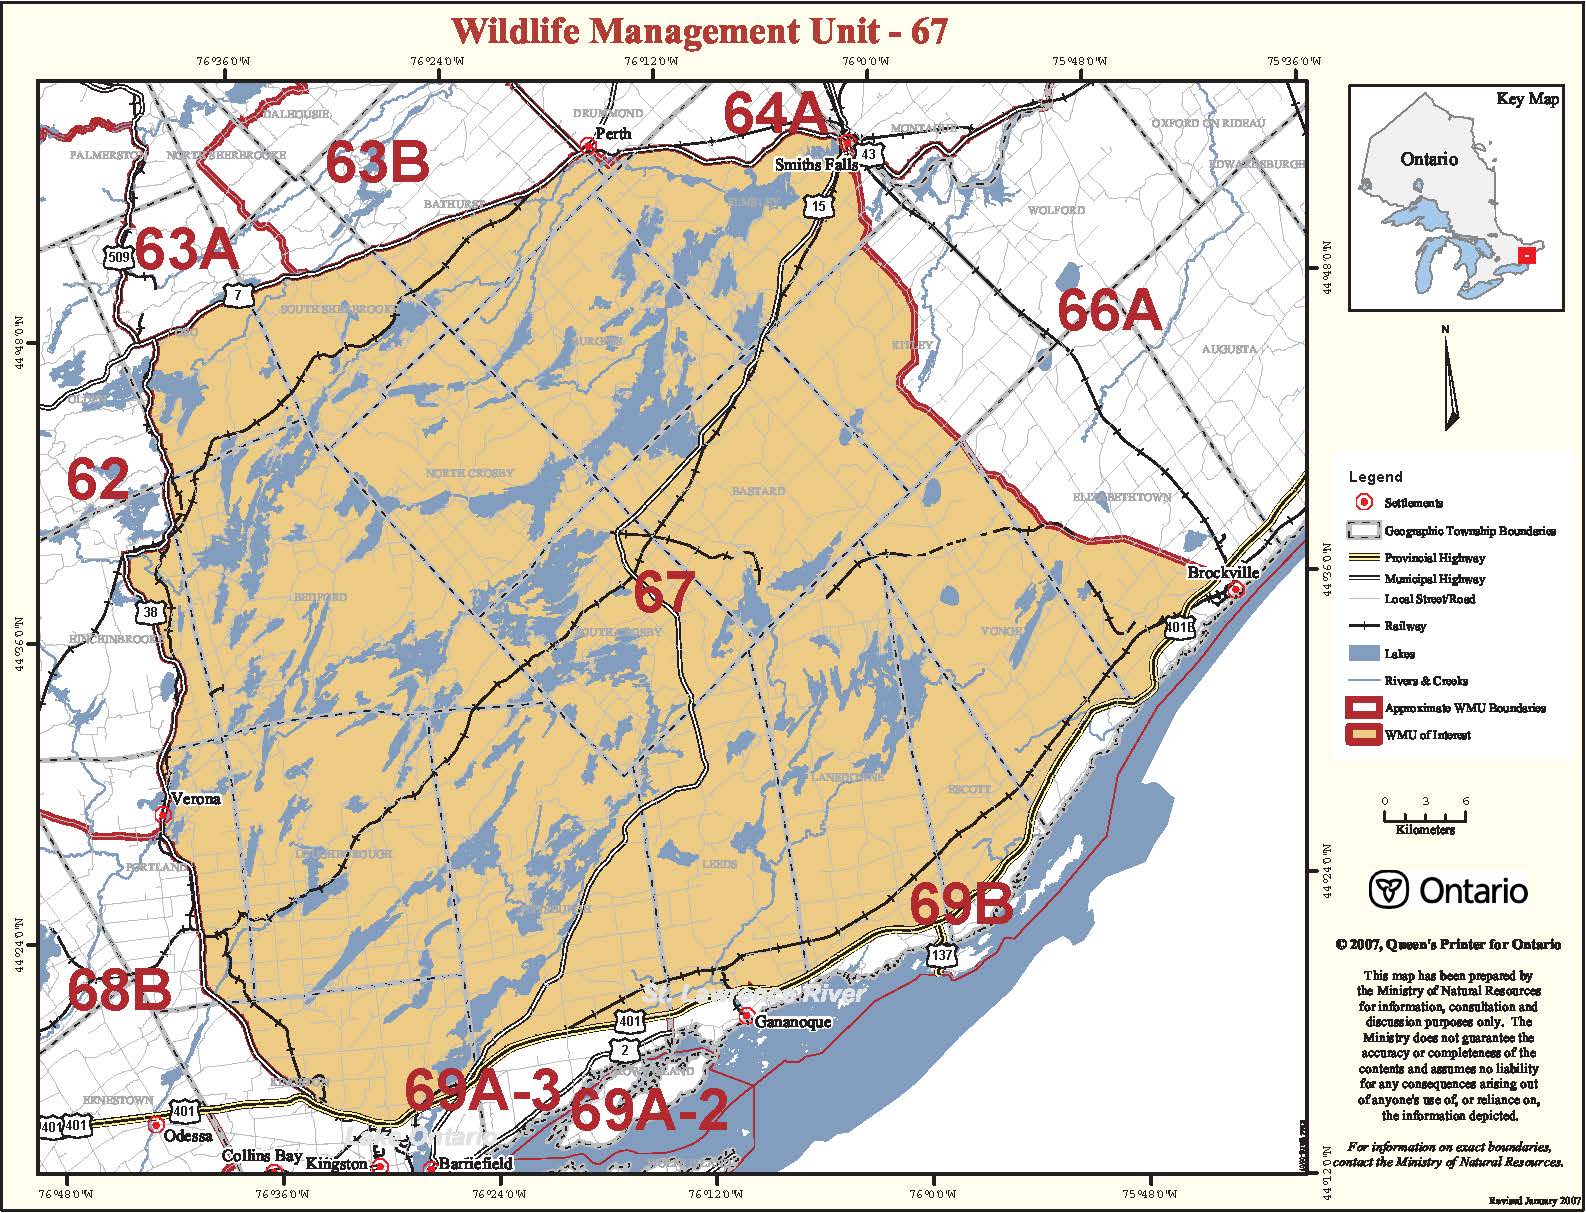 Detailed map of wildlife management unit 67